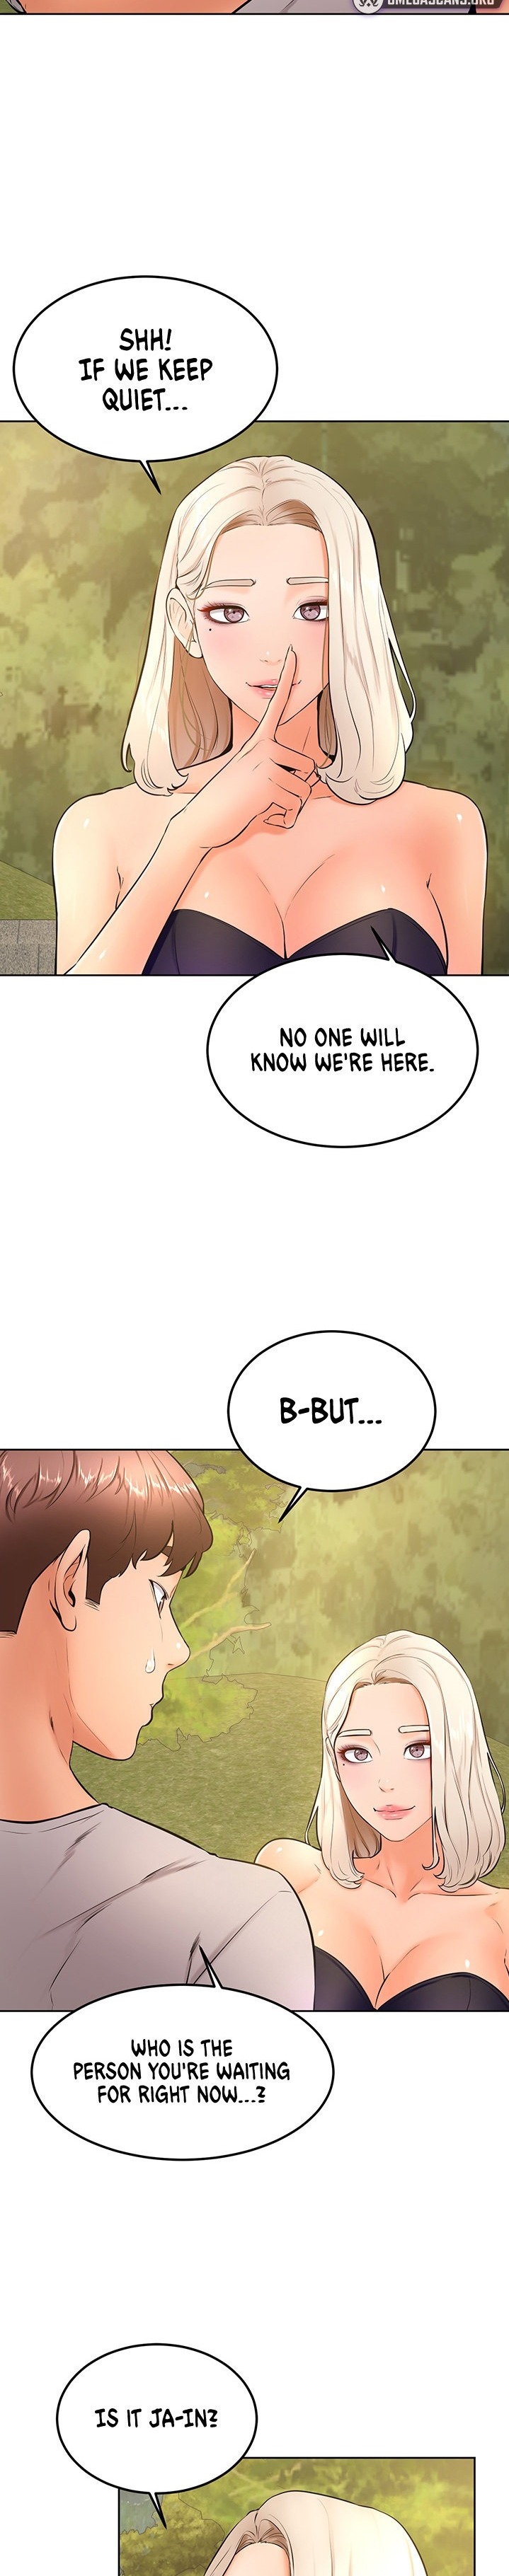 Cheer Up, Namjoo Chapter 29 - Page 2